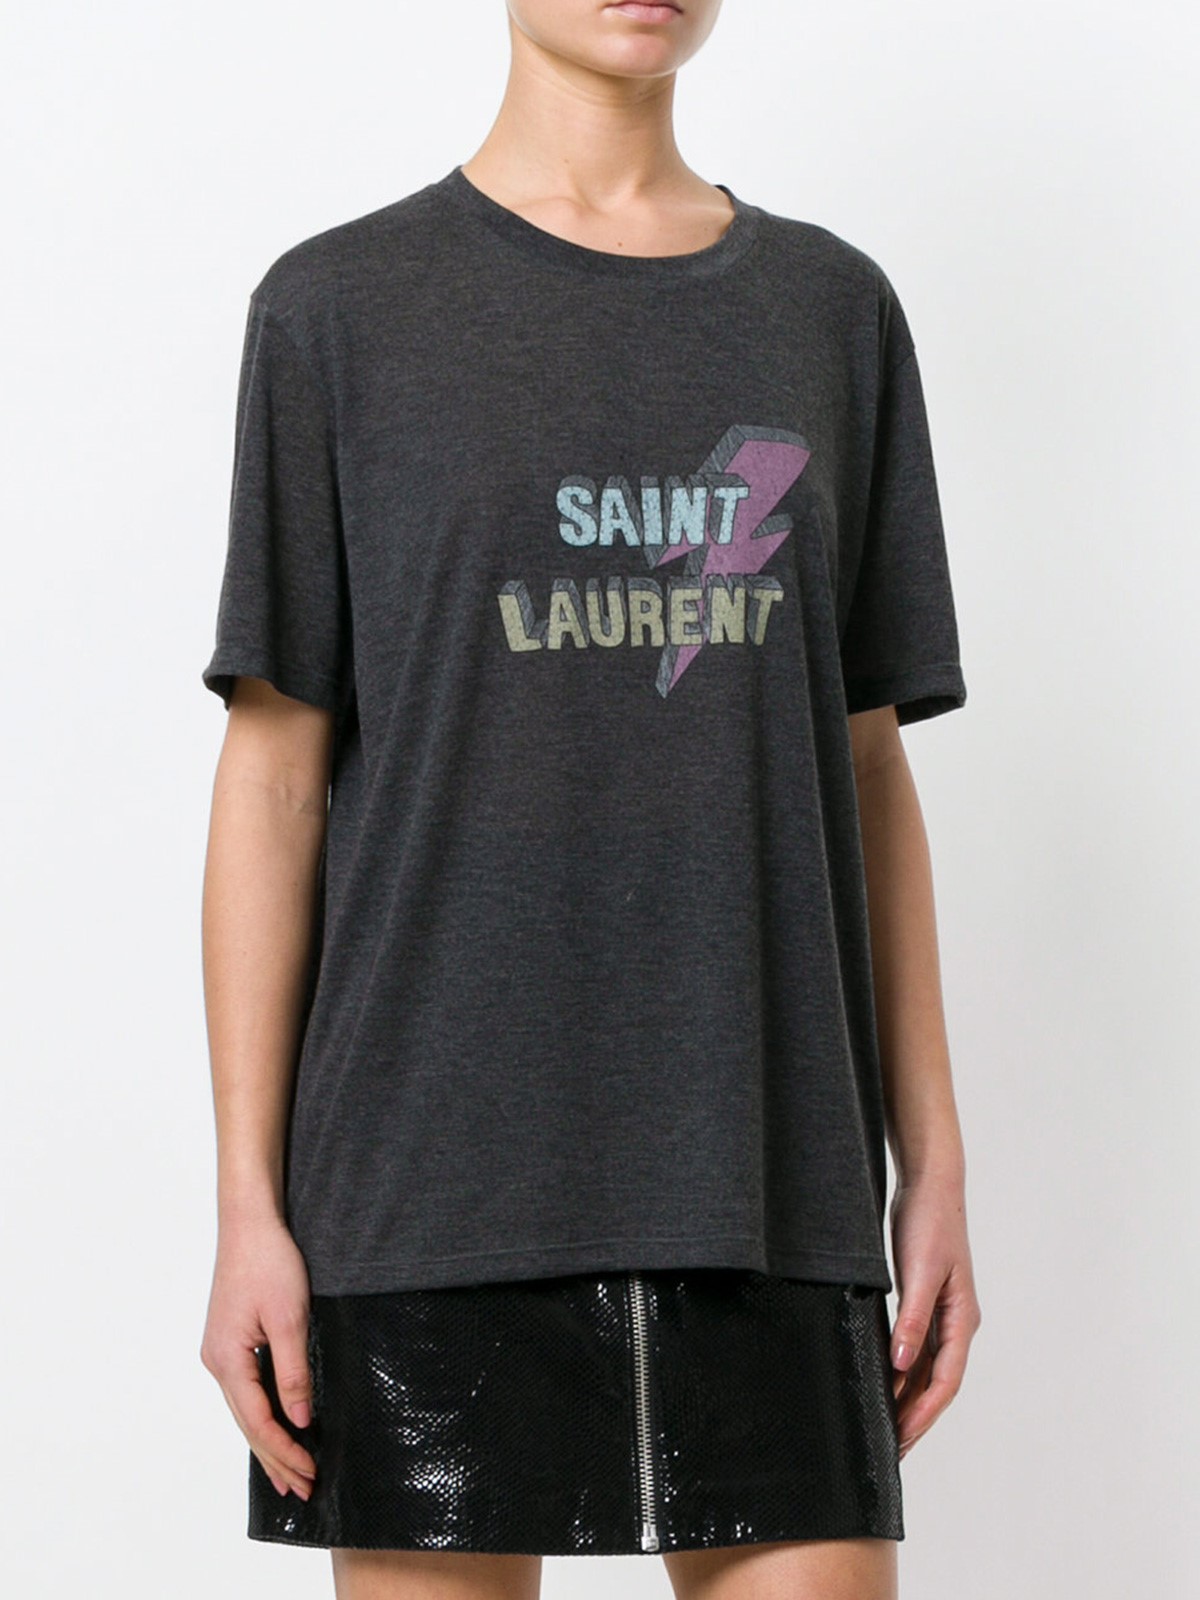 Buy > saint laurent sweatshirt lightning bolt > in stock